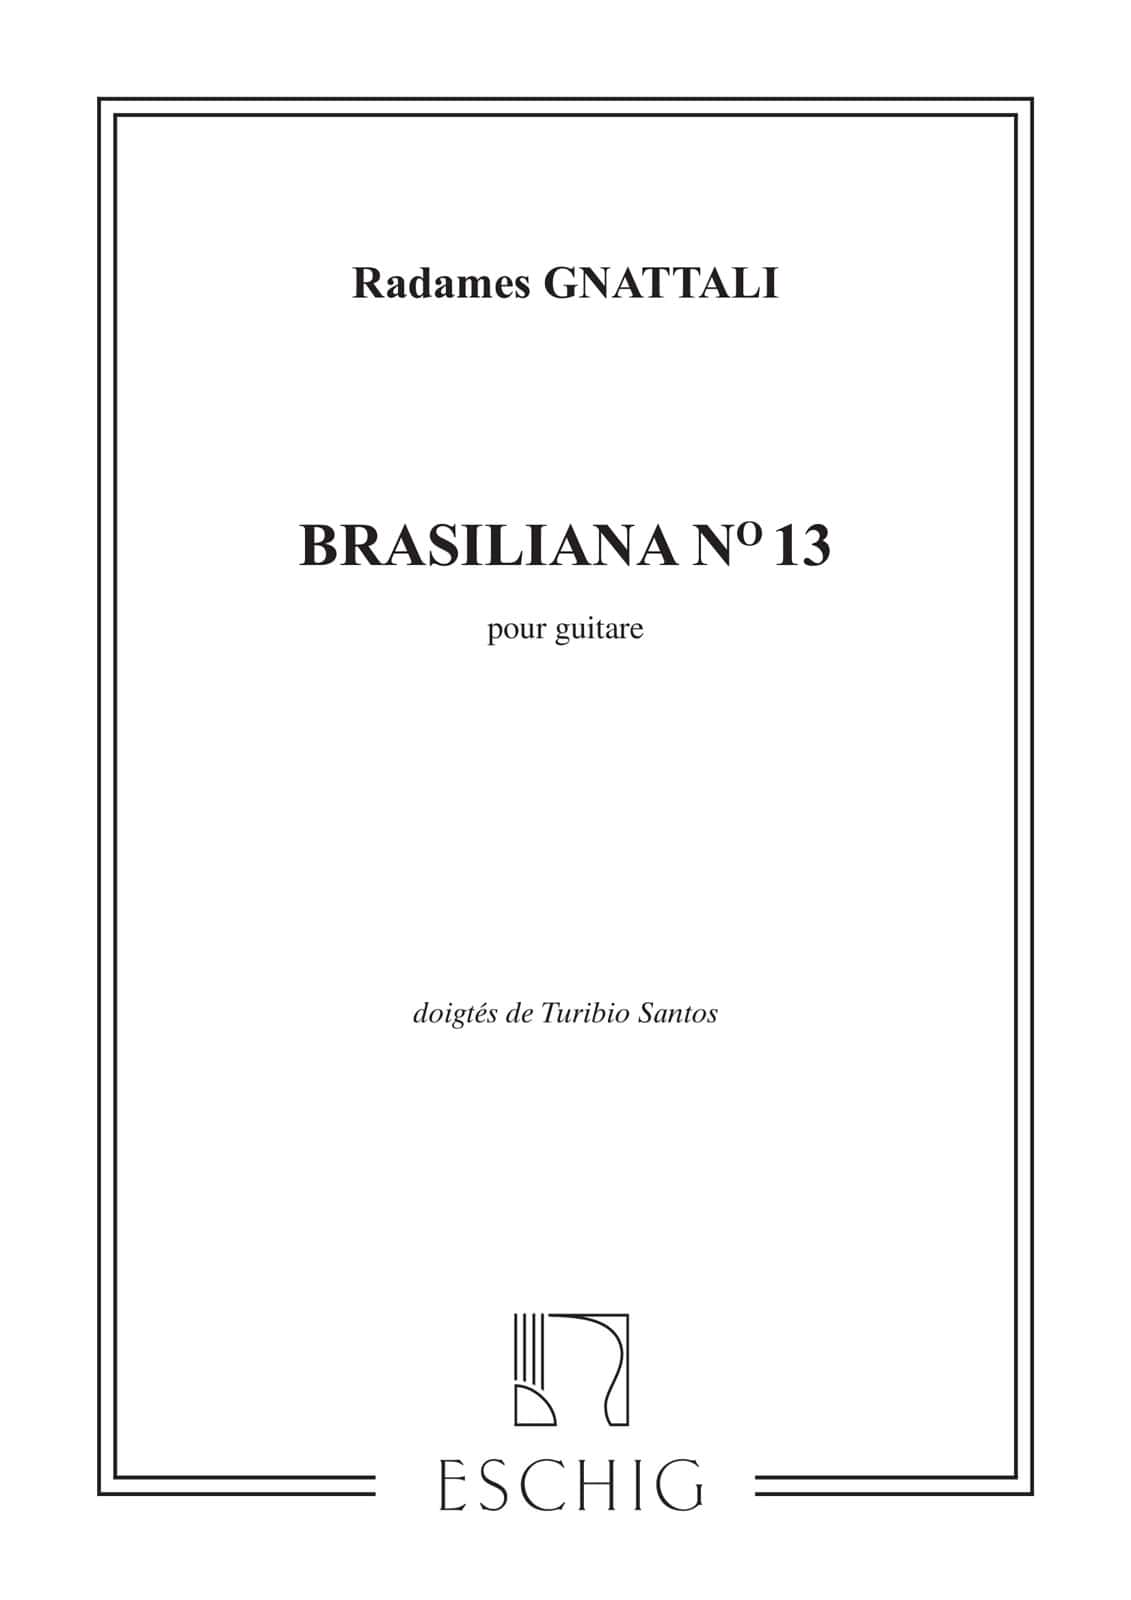 EDITION MAX ESCHIG GNATTALI RADAMES - BRASILIANA N°13 - GUITARE